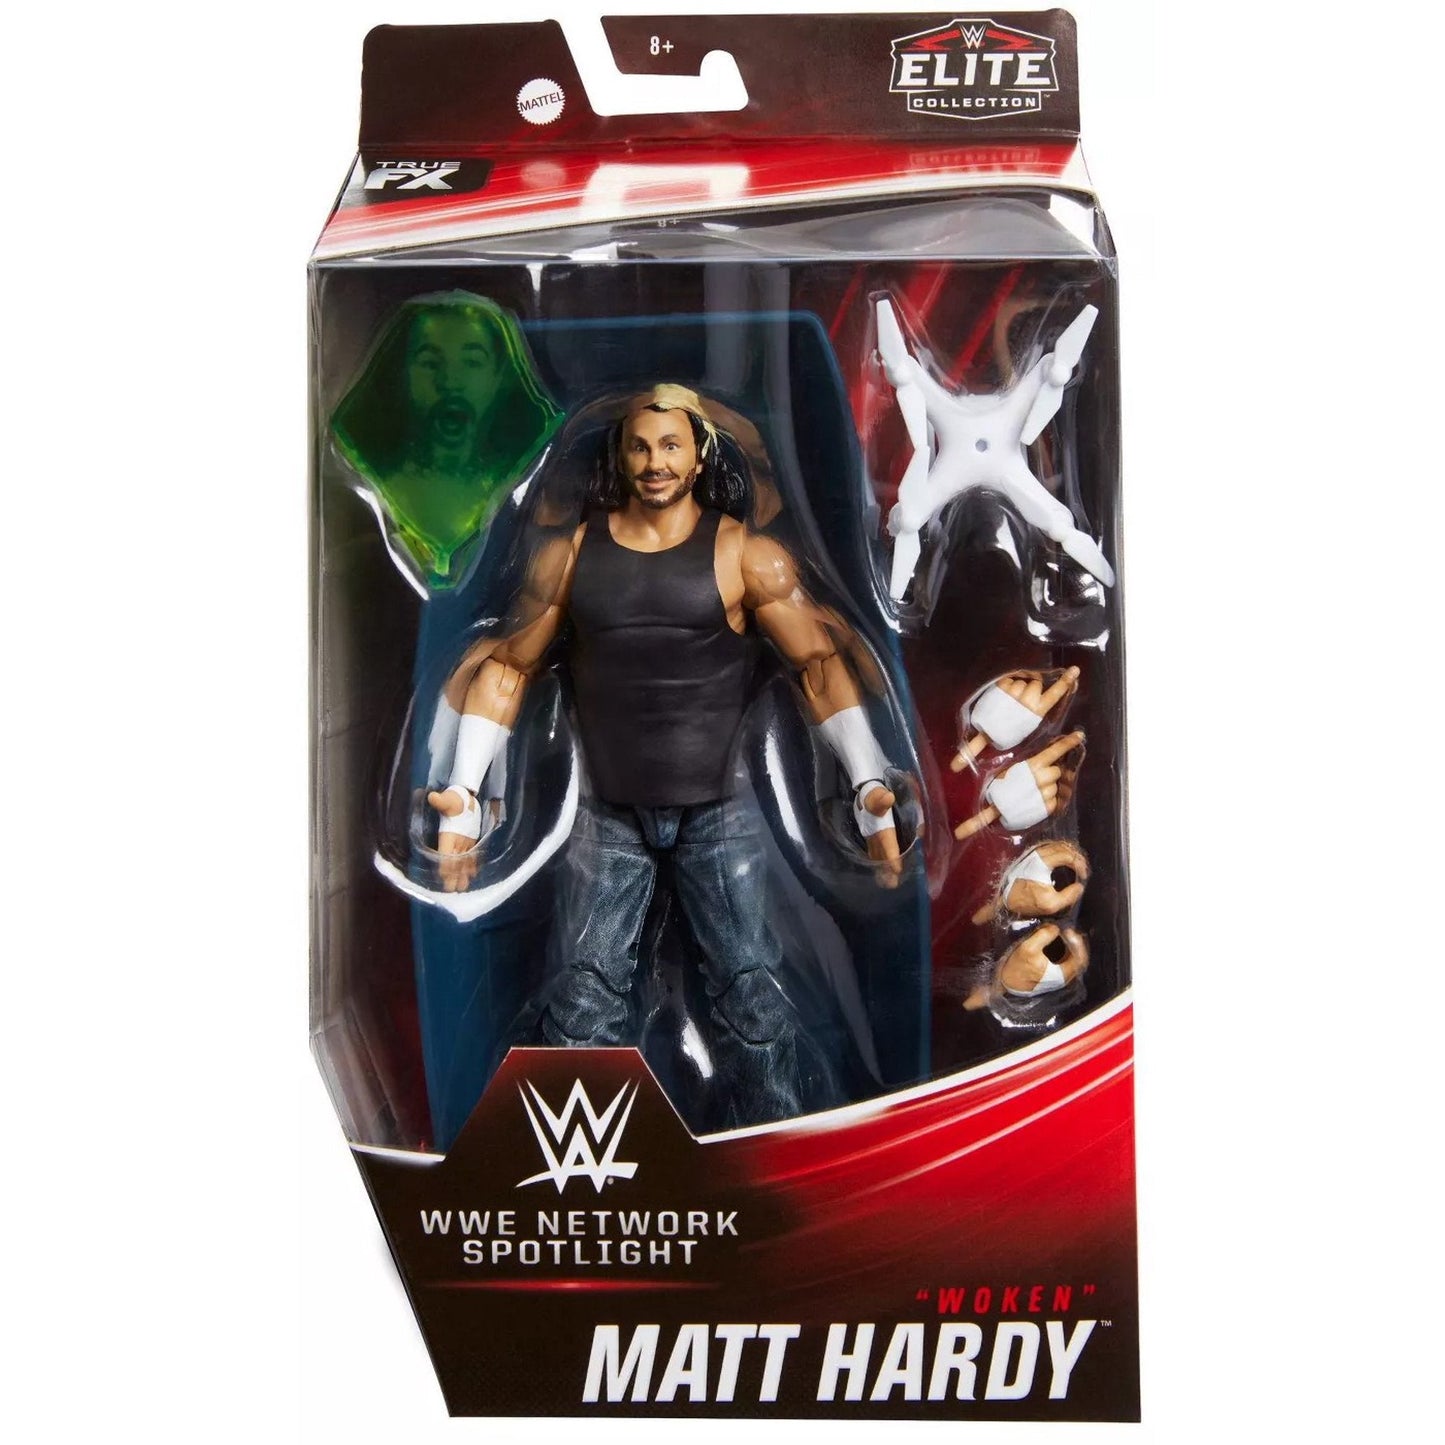 2020 WWE Mattel Elite Collection Network Spotlight Series 3 "Woken" Matt Hardy [Exclusive]